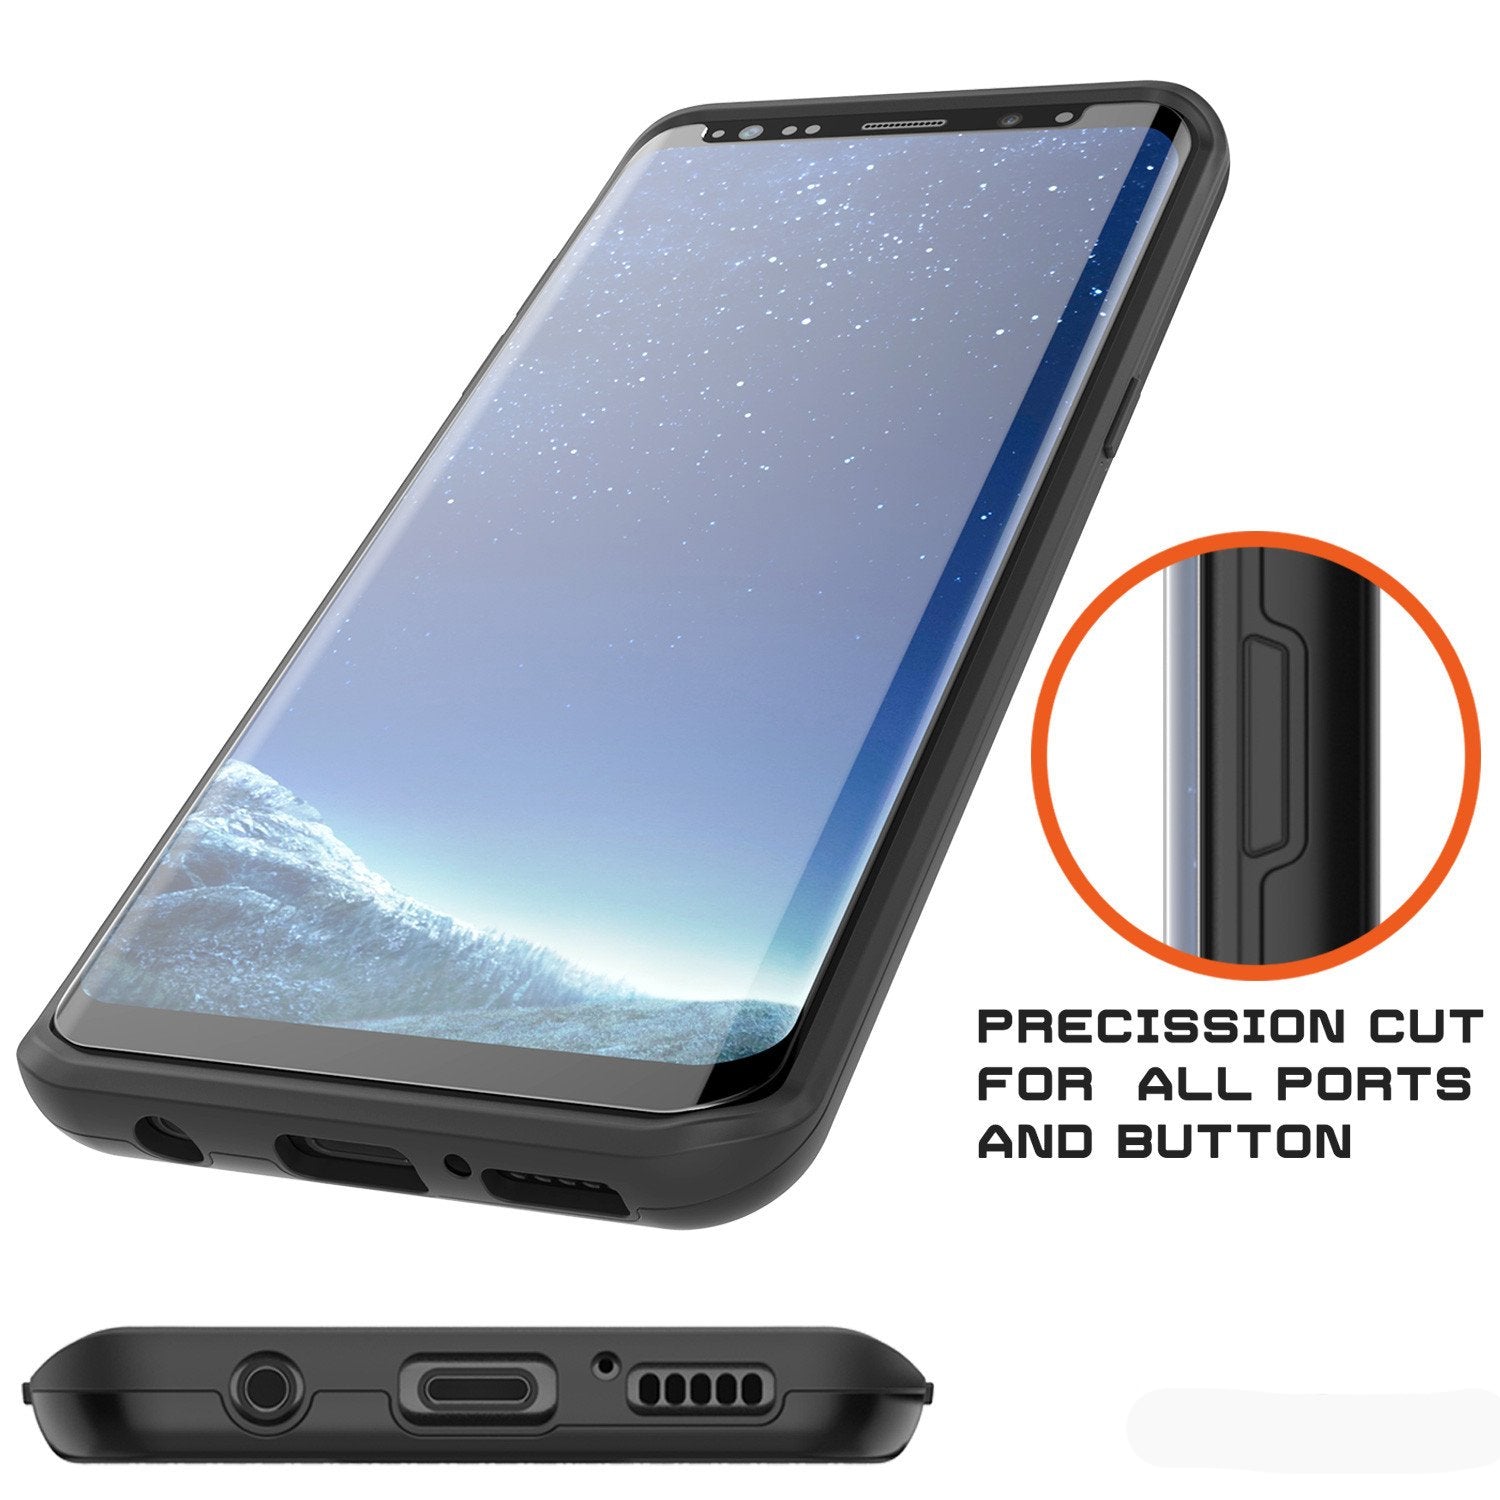 Galaxy S8 Plus Case PunkCase SLOT Black Series Slim Armor Soft Cover Case